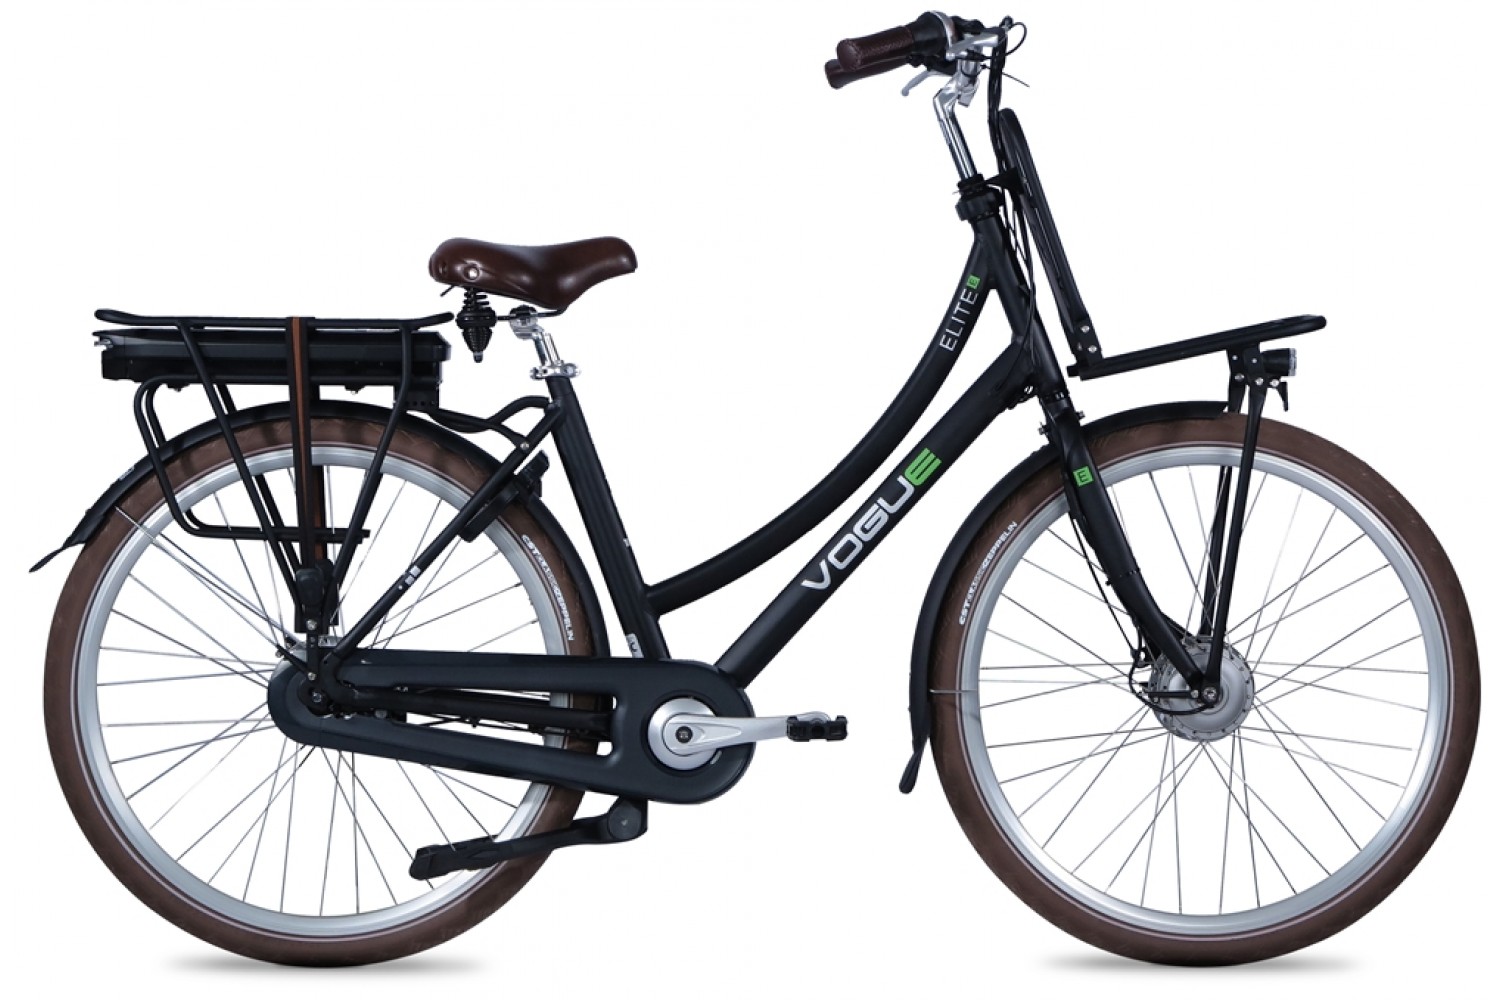 Zuidelijk Overtreffen adverteren Vogue Elite Elektrische Fiets N7 Mat-Zwart | City-Bikes.nl